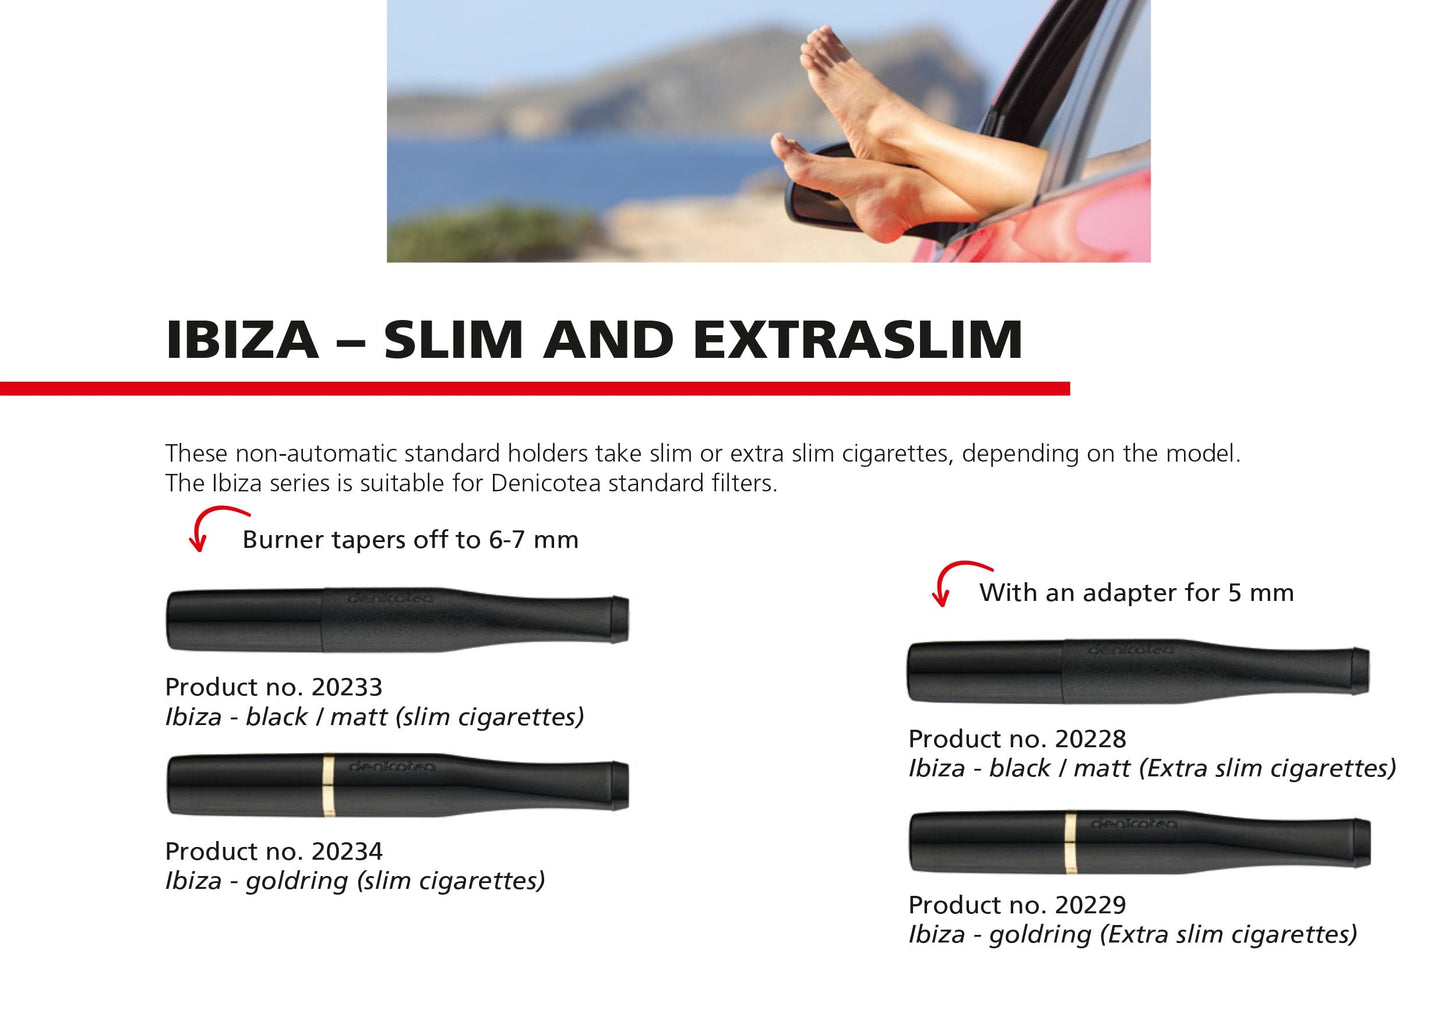 Ibiza Extra Slim Matte Black - Extra Slim Holder with 10 Free Filters  20228